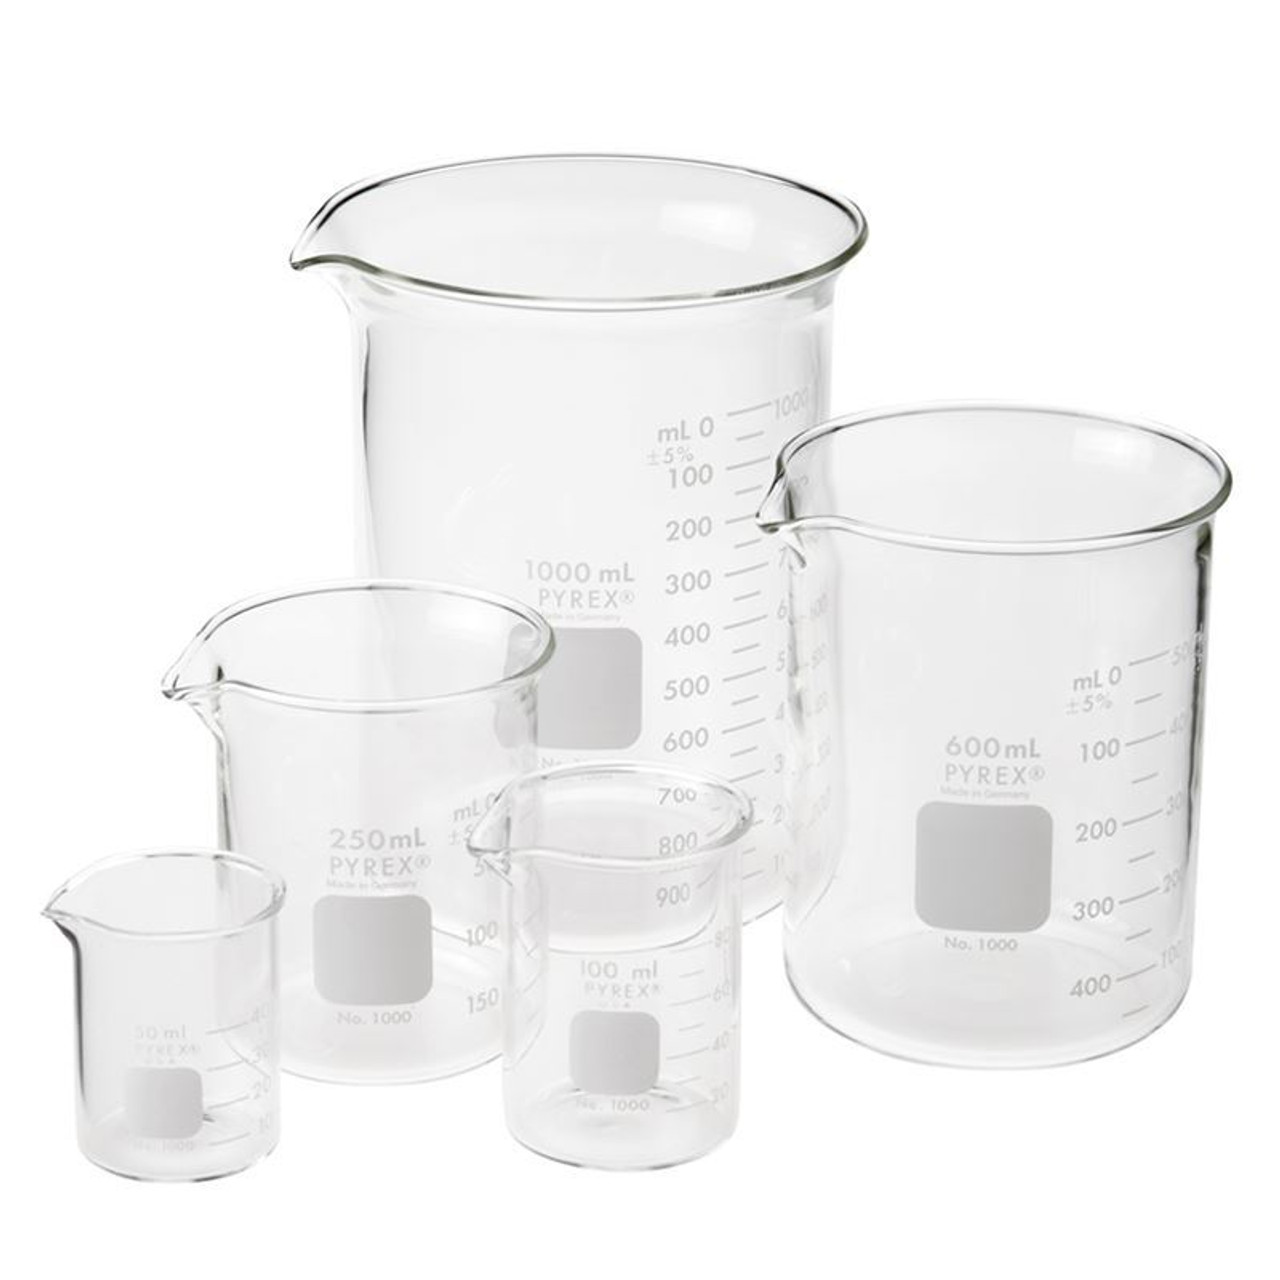 2 Pack Food Grade Stainless Steel Large Measuring Cup Beaker Jug Container  for Liquid Food Oil Measurement, 500ml 